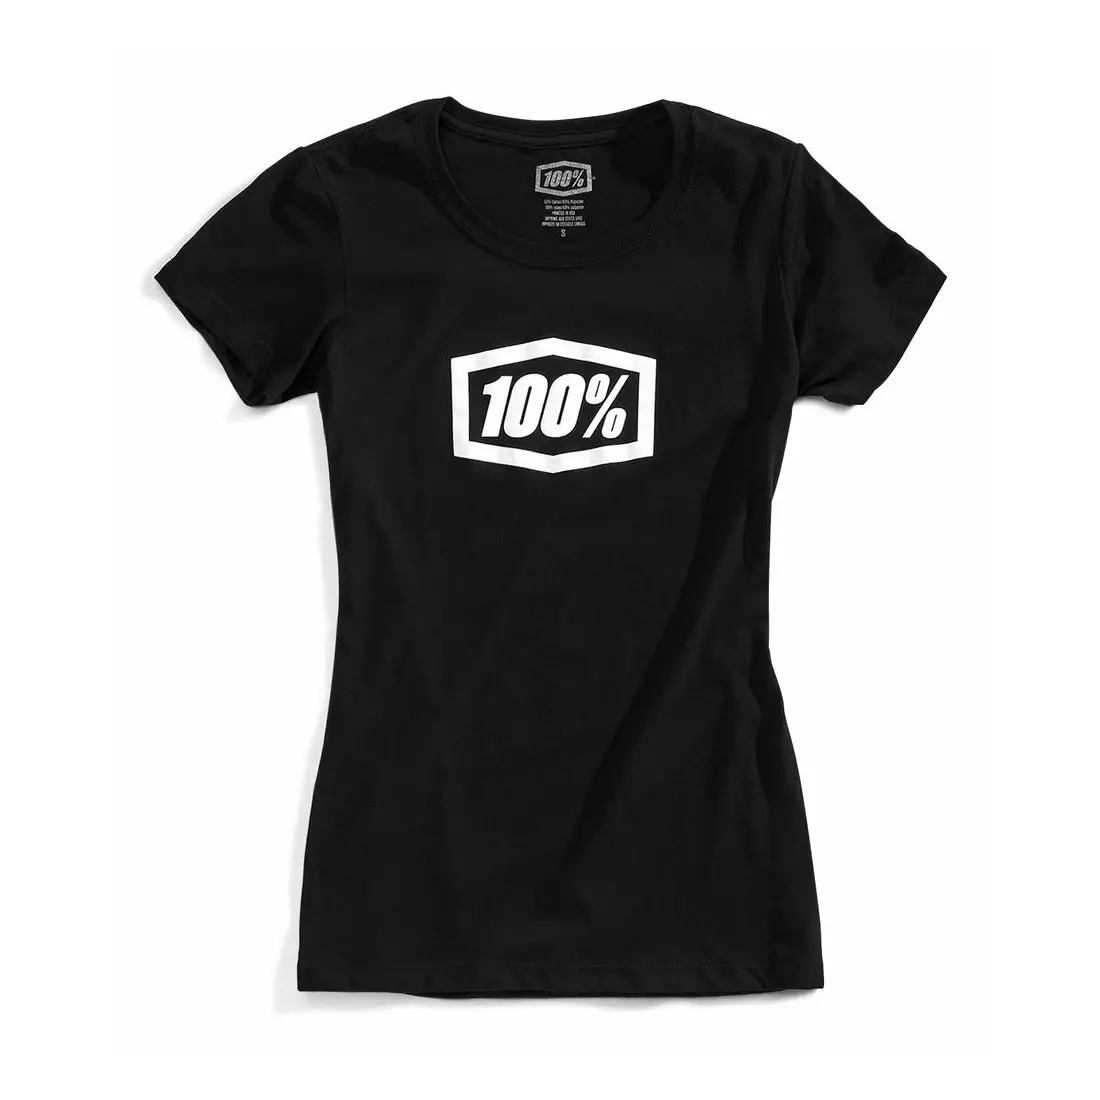 100% ladies' short sleeve T-shirt essential black STO-28016-001-10